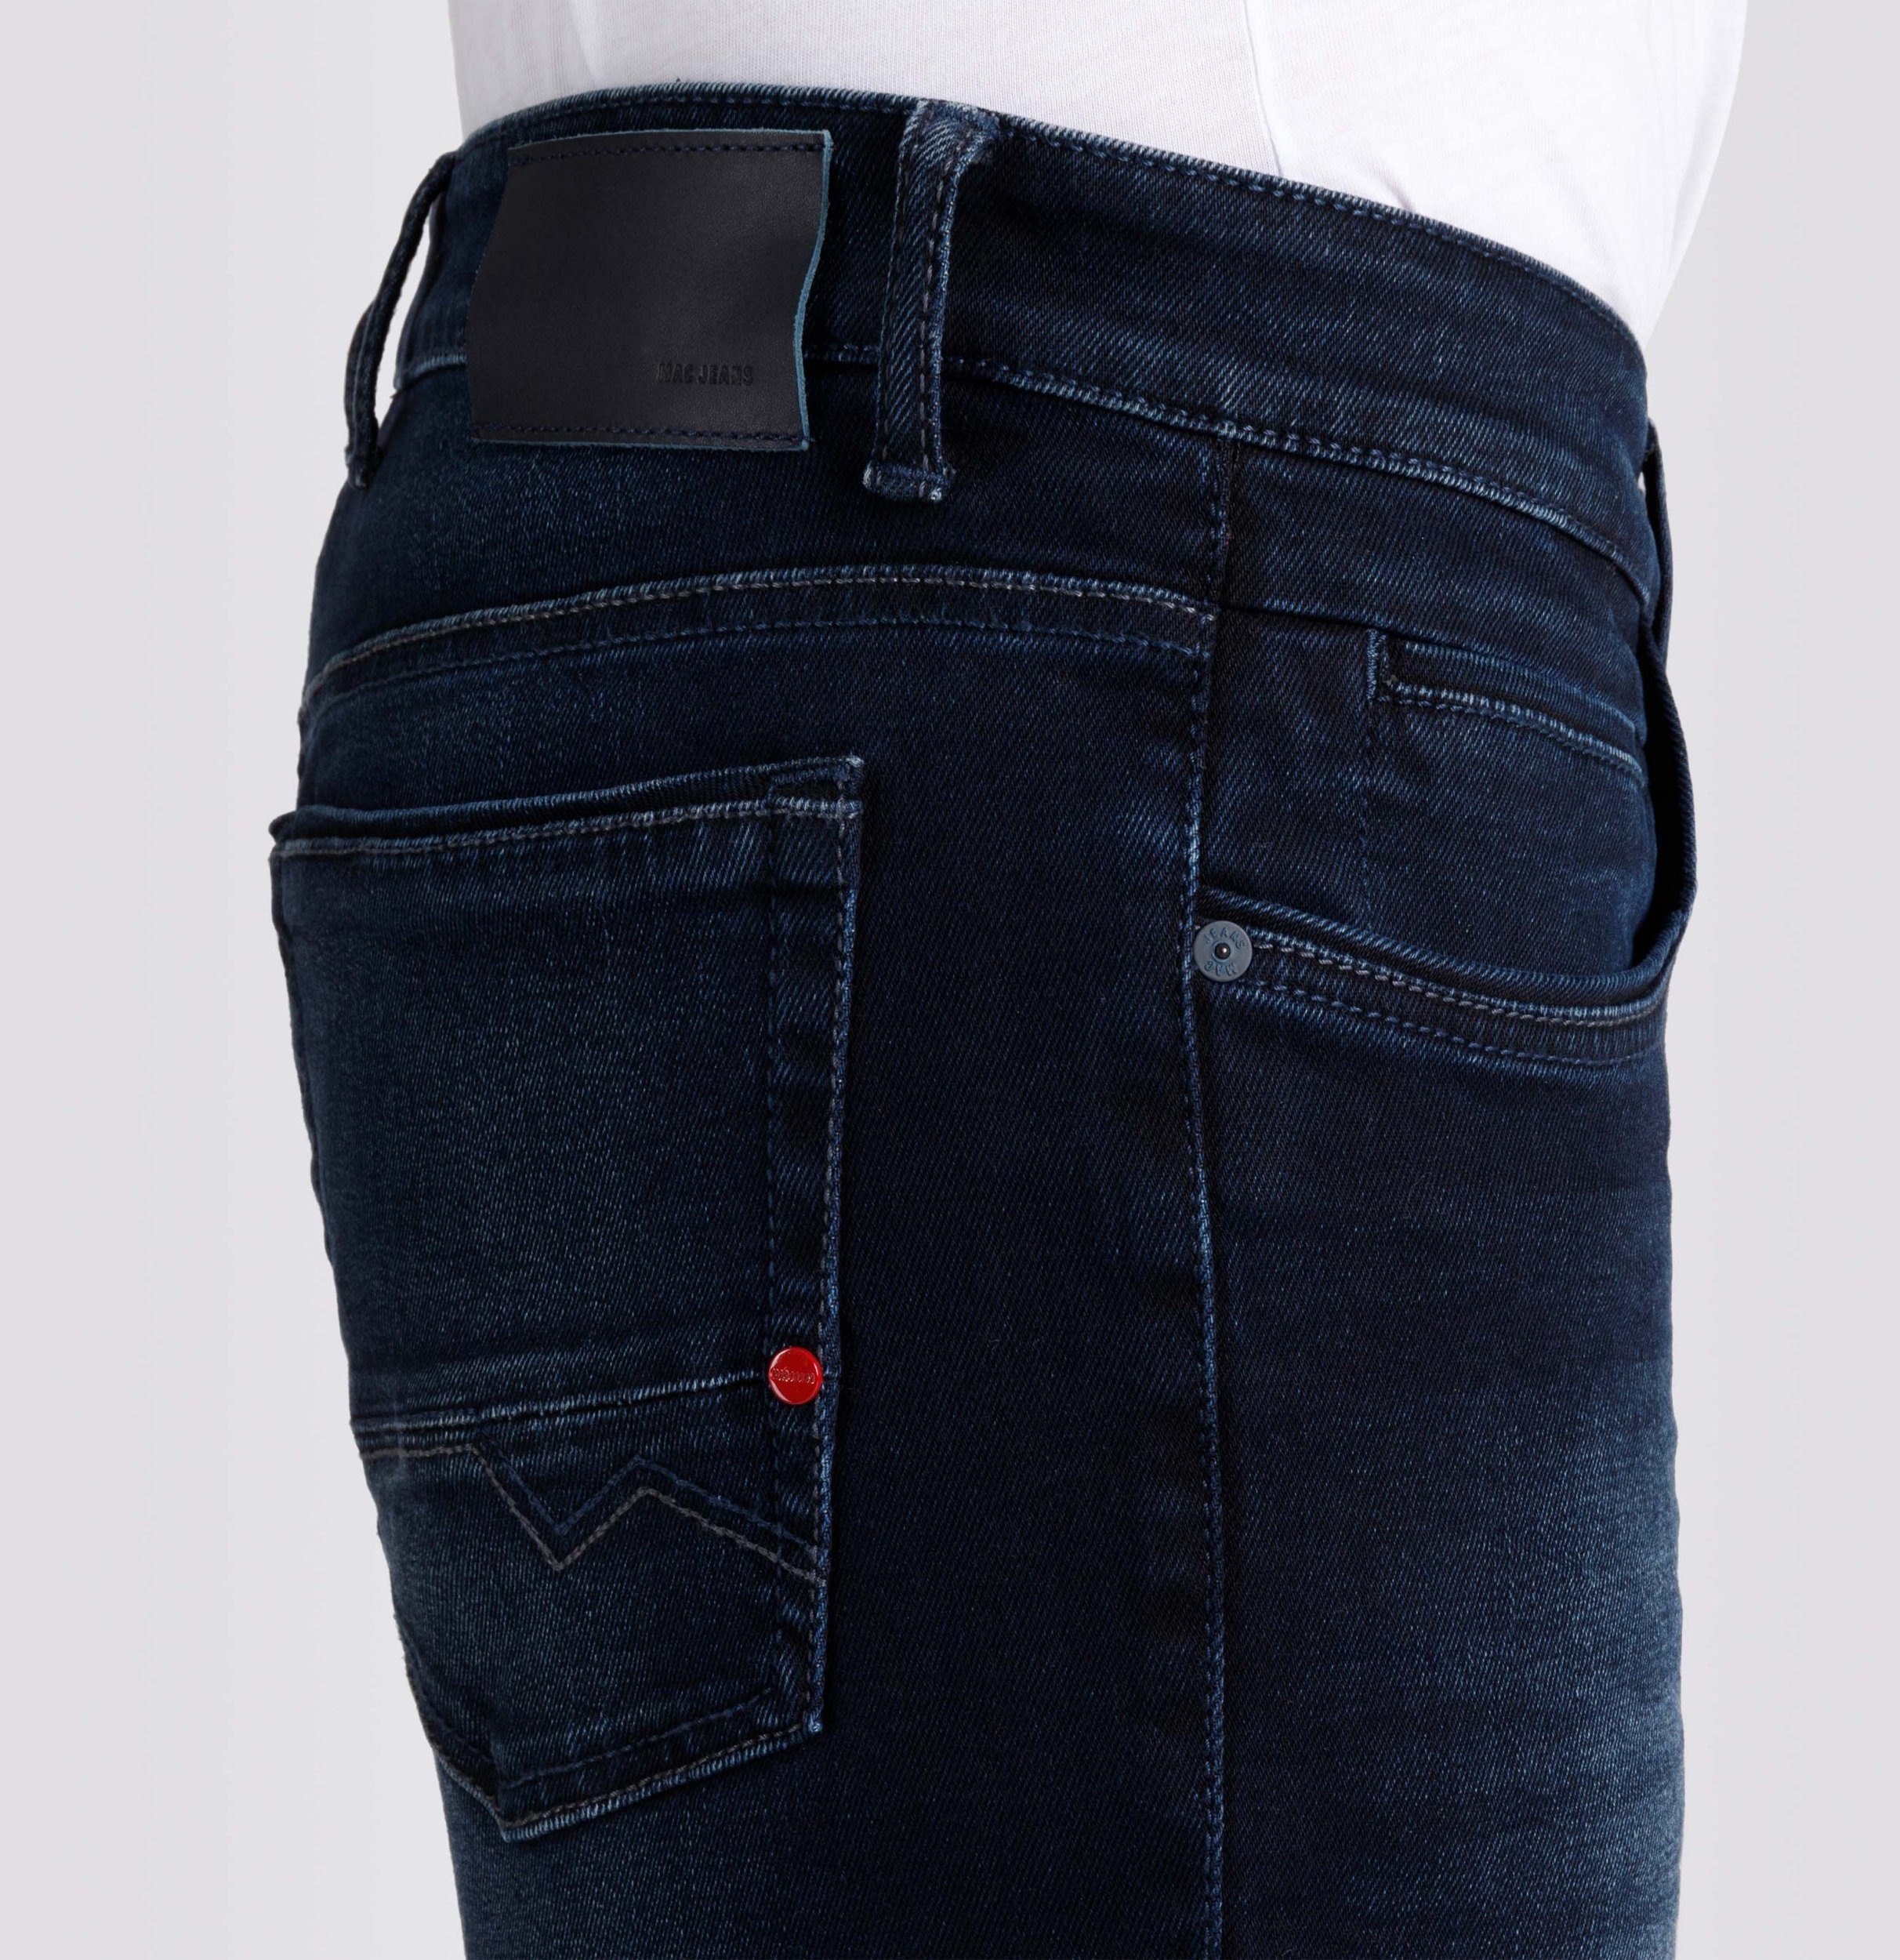 H793 authentic MAC 5-Pocket-Jeans Pipe black blue wash Arne